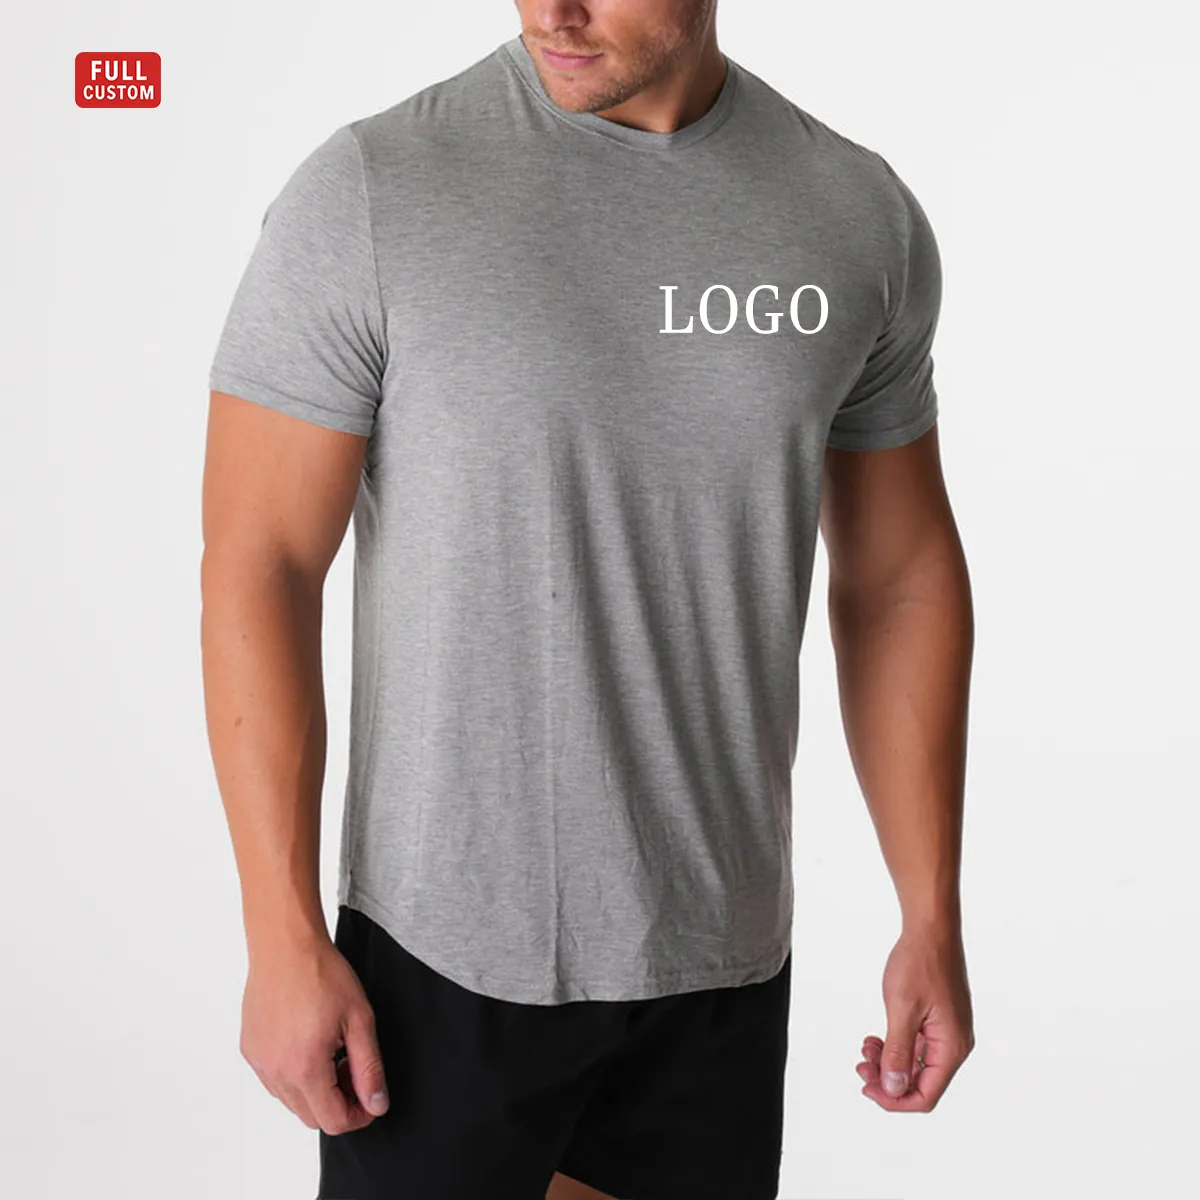 Kaus olahraga spandeks 5 katun 95 kualitas tinggi kaus oblong aktif cocok untuk pria